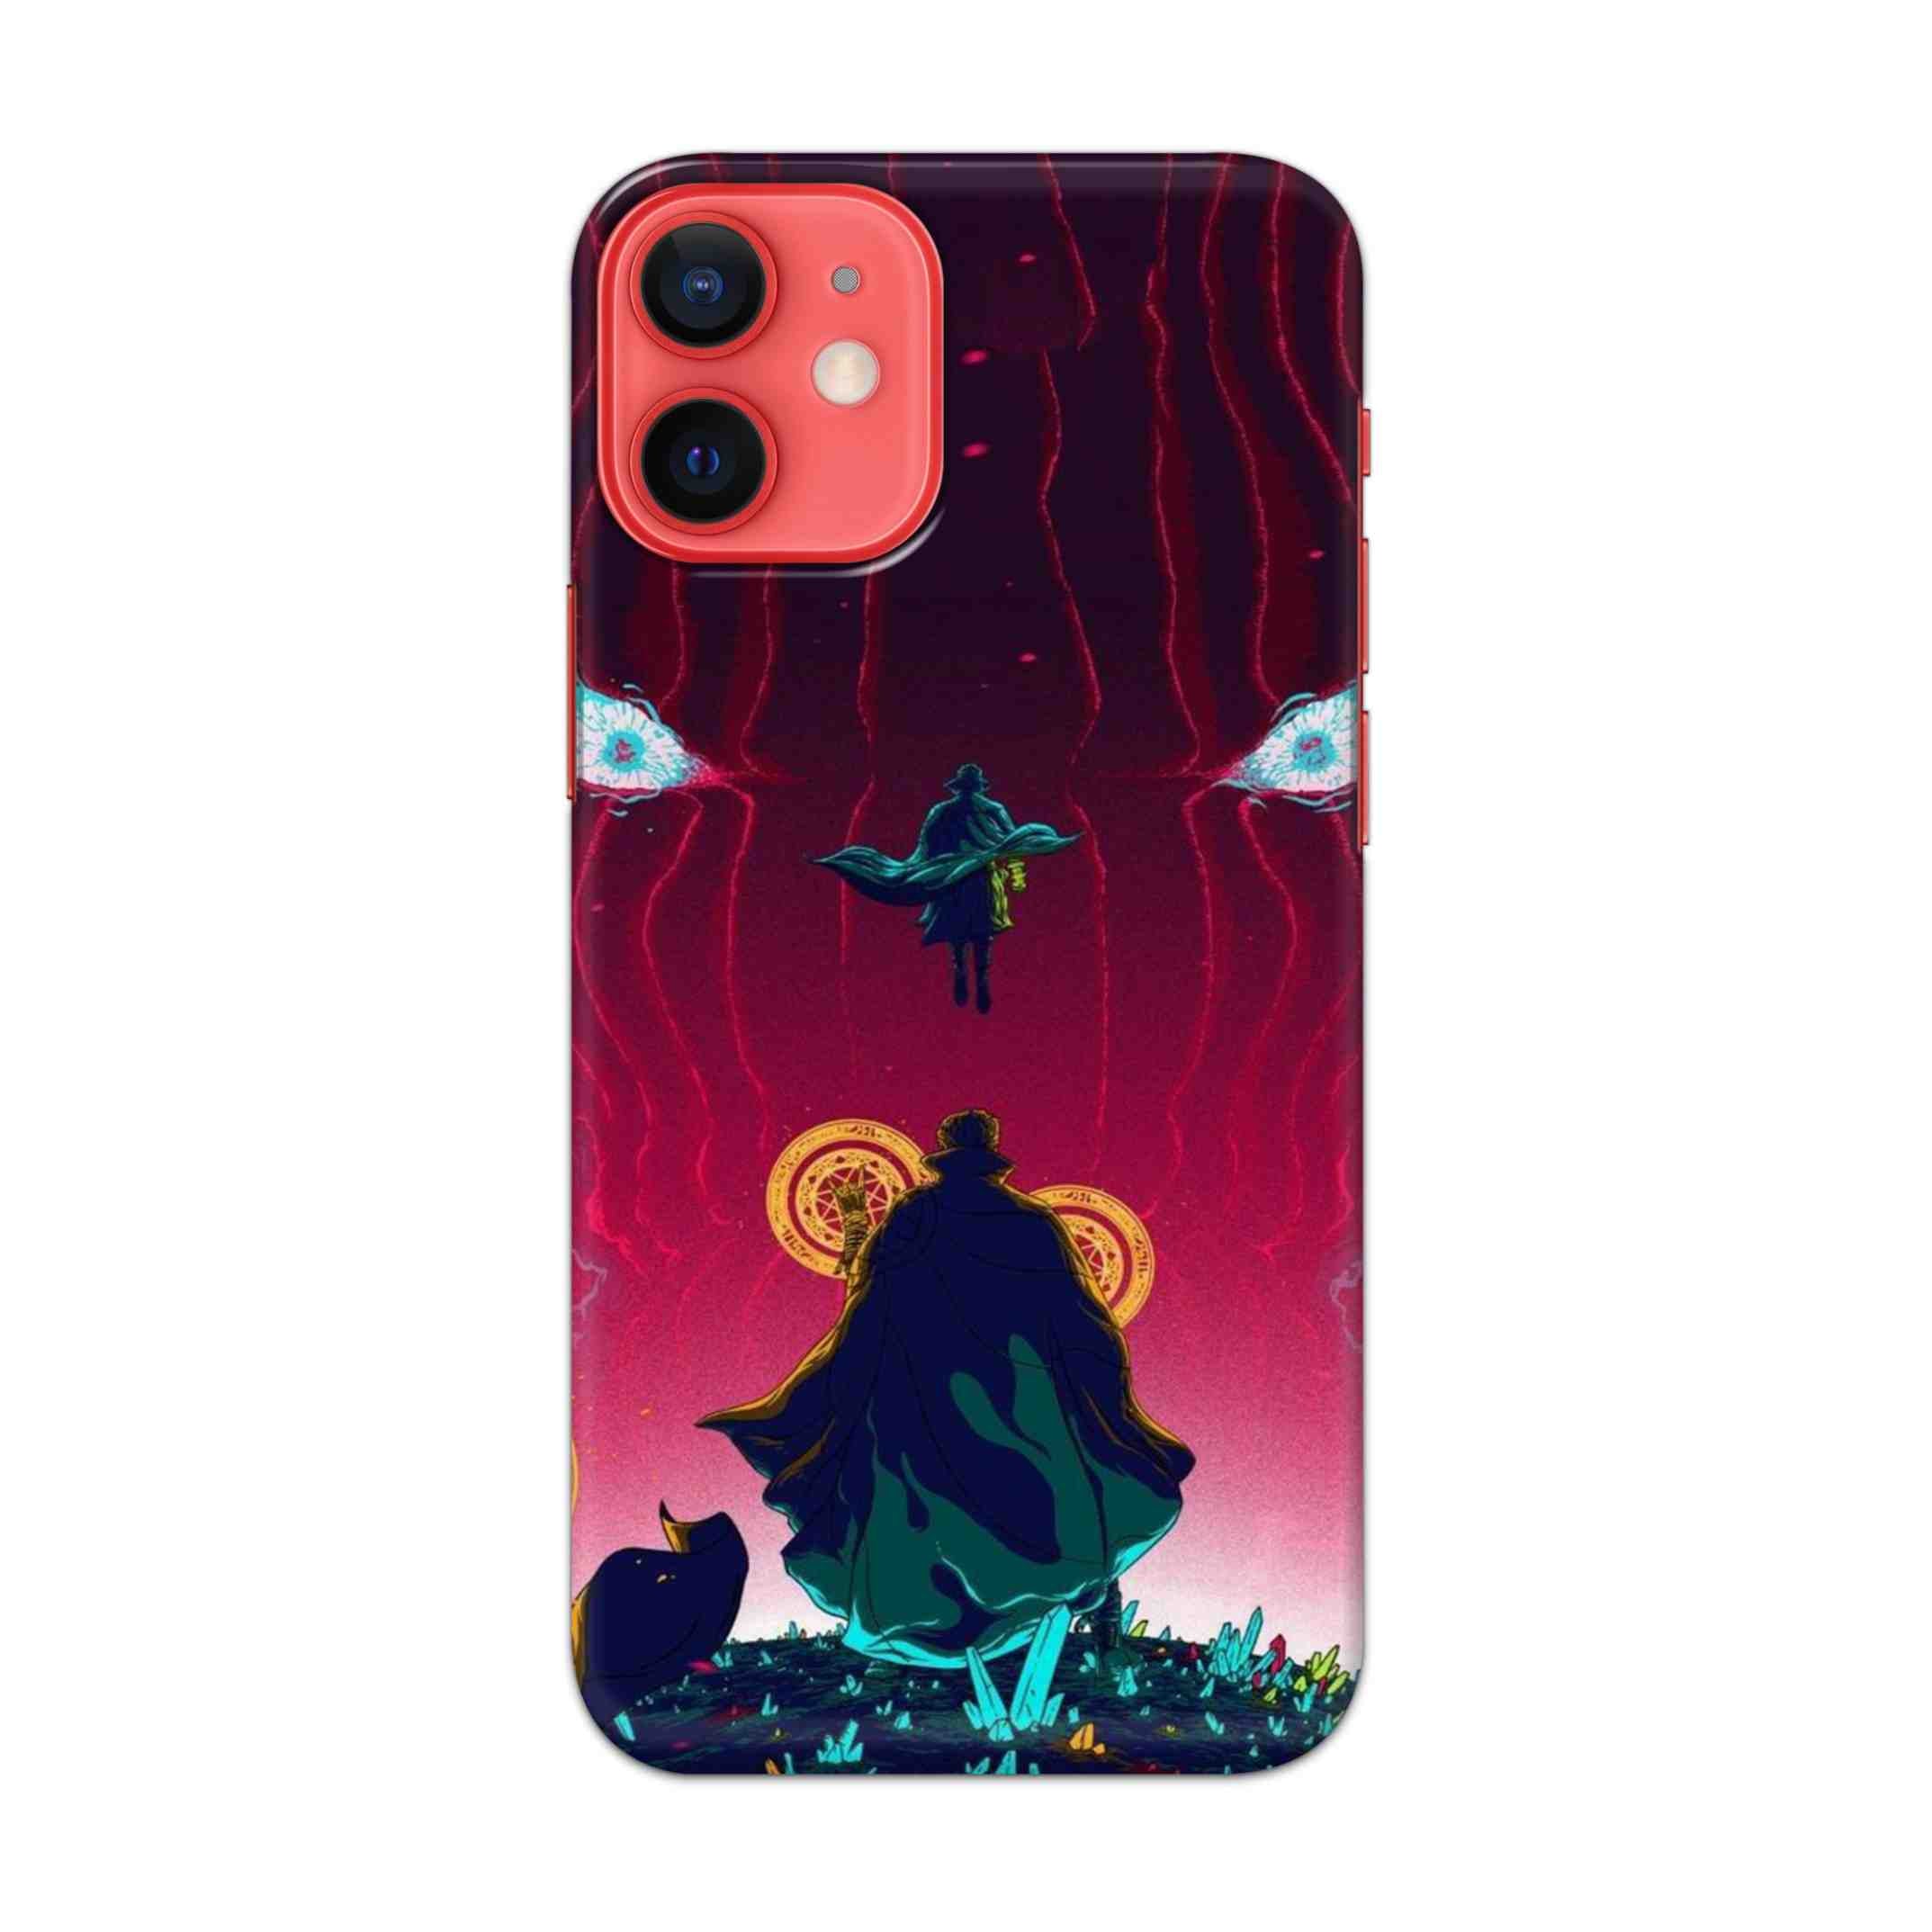 Buy Doctor Strange Hard Back Mobile Phone Case/Cover For Apple iPhone 12 mini Online